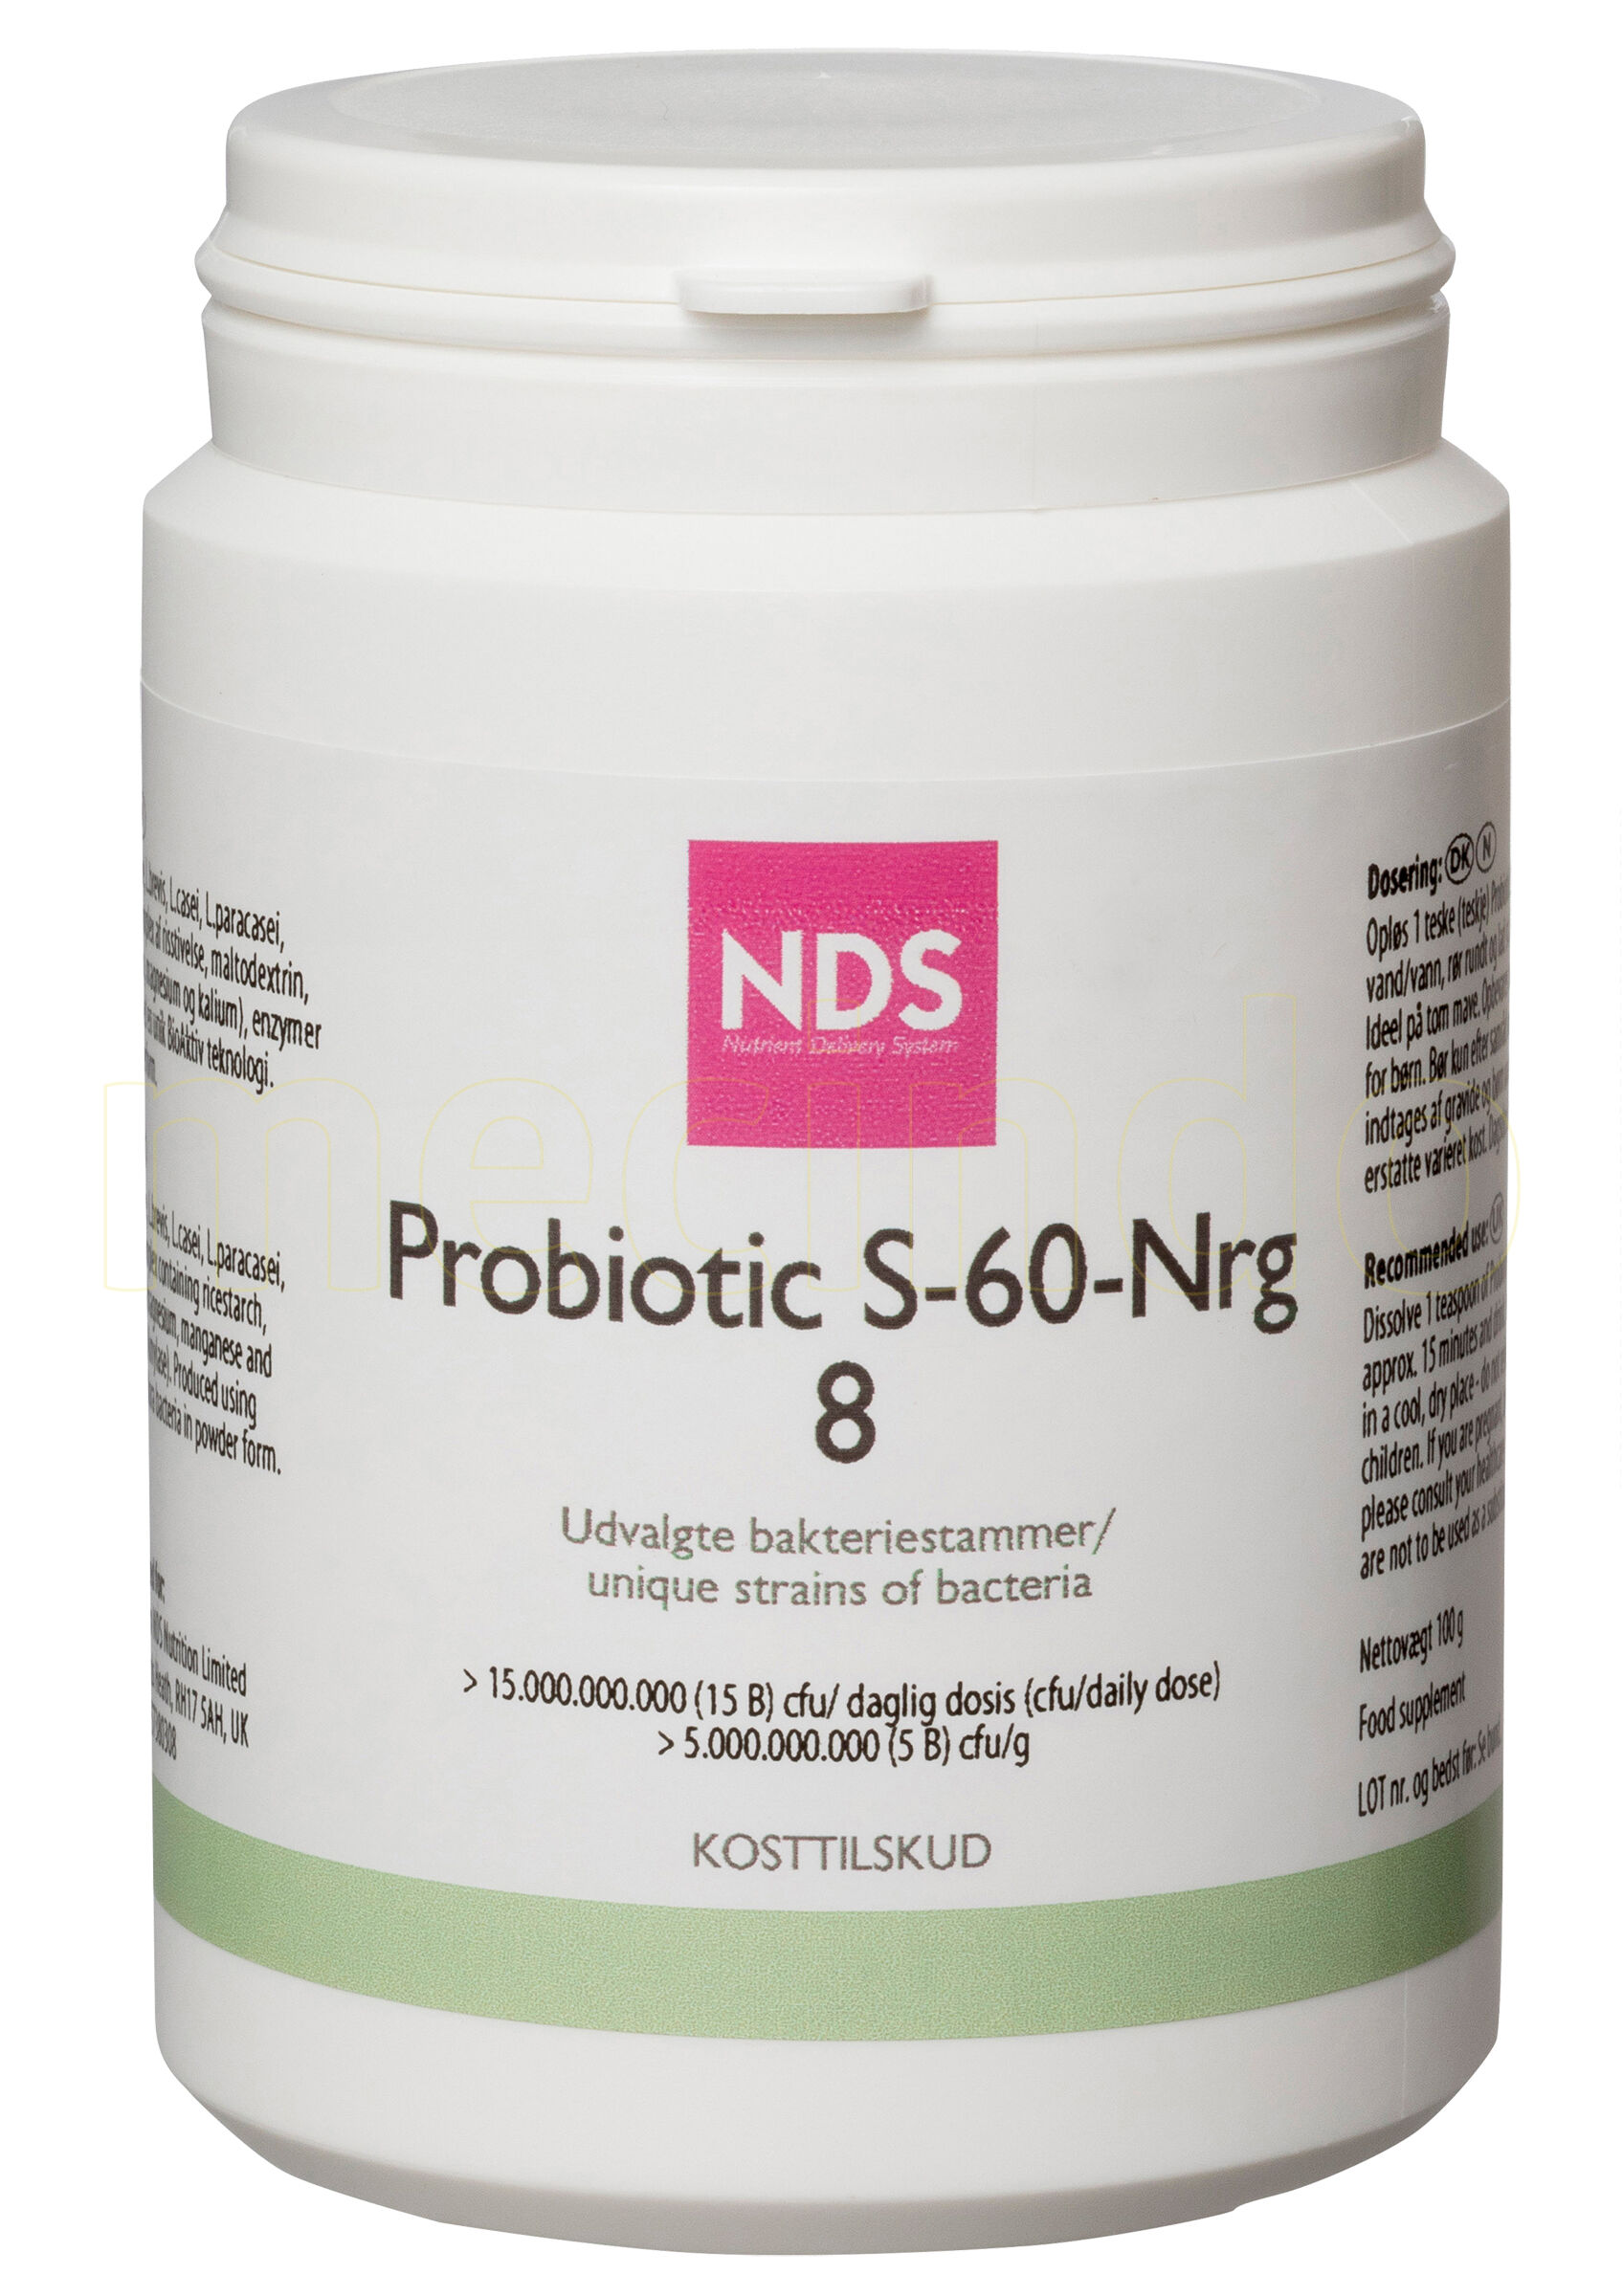 NDS Probiotic S-60-nrg 8 - 100 g